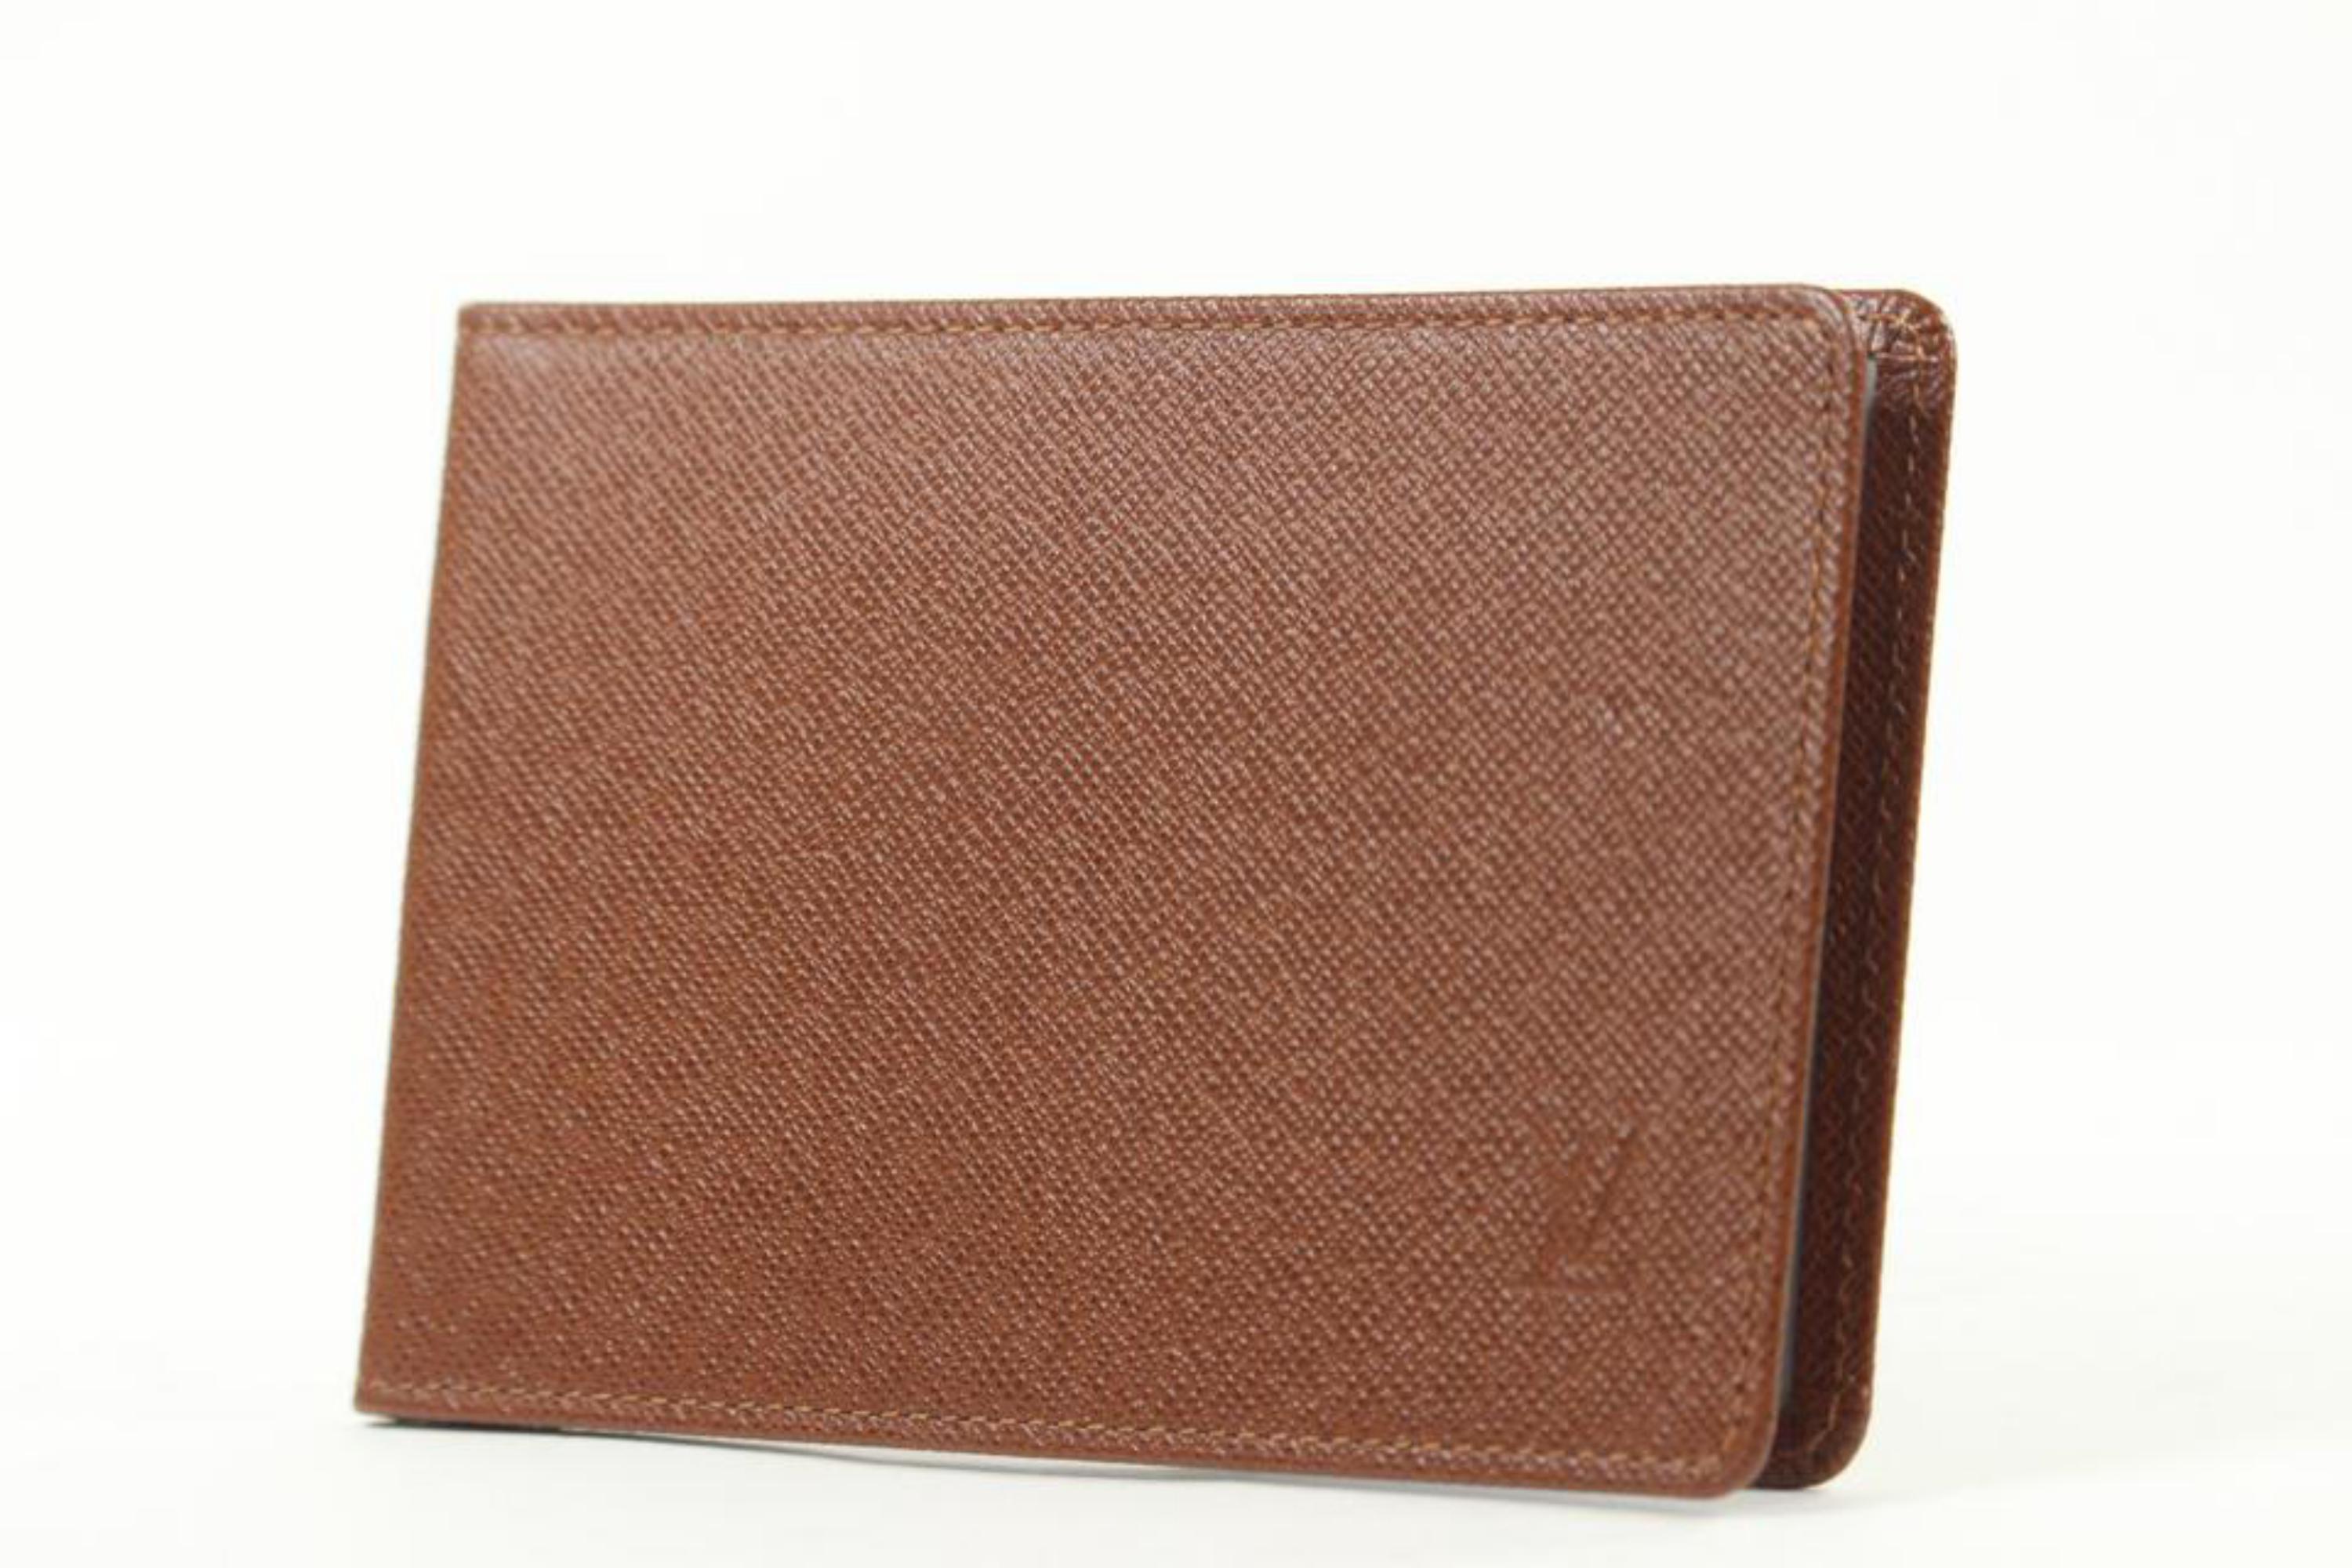 Louis Vuitton Brown ID Holder Card Wallet Insert 1LZ1104
Date Code/Serial Number: SP 1021
Measurements: Length: 5 